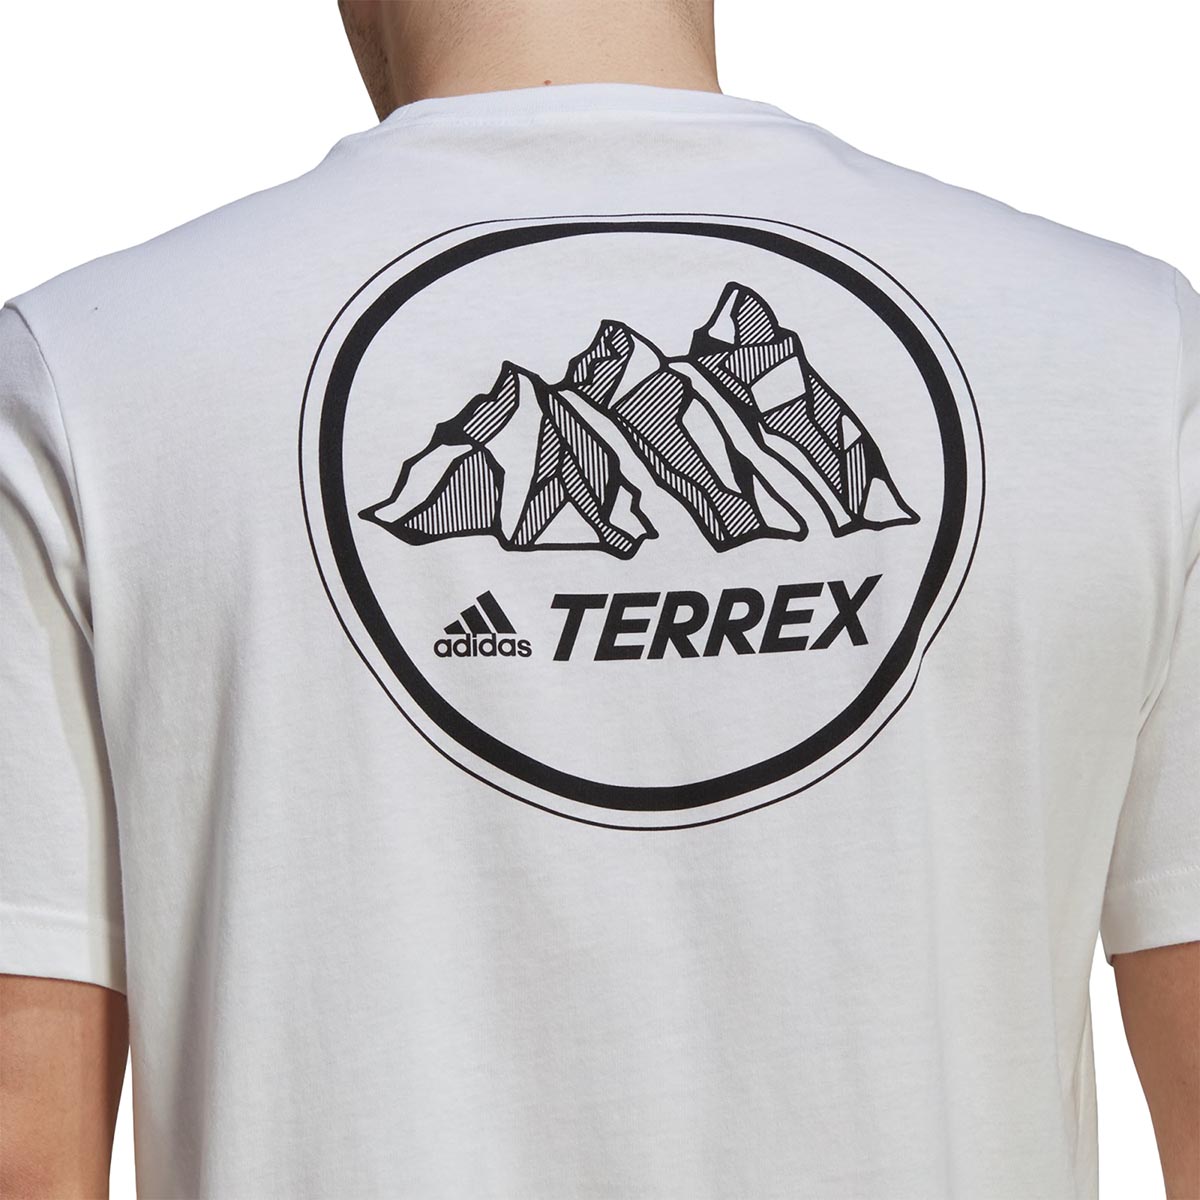 ADIDAS - TERREX MOUNTAIN GRAPHIC T-SHIRT